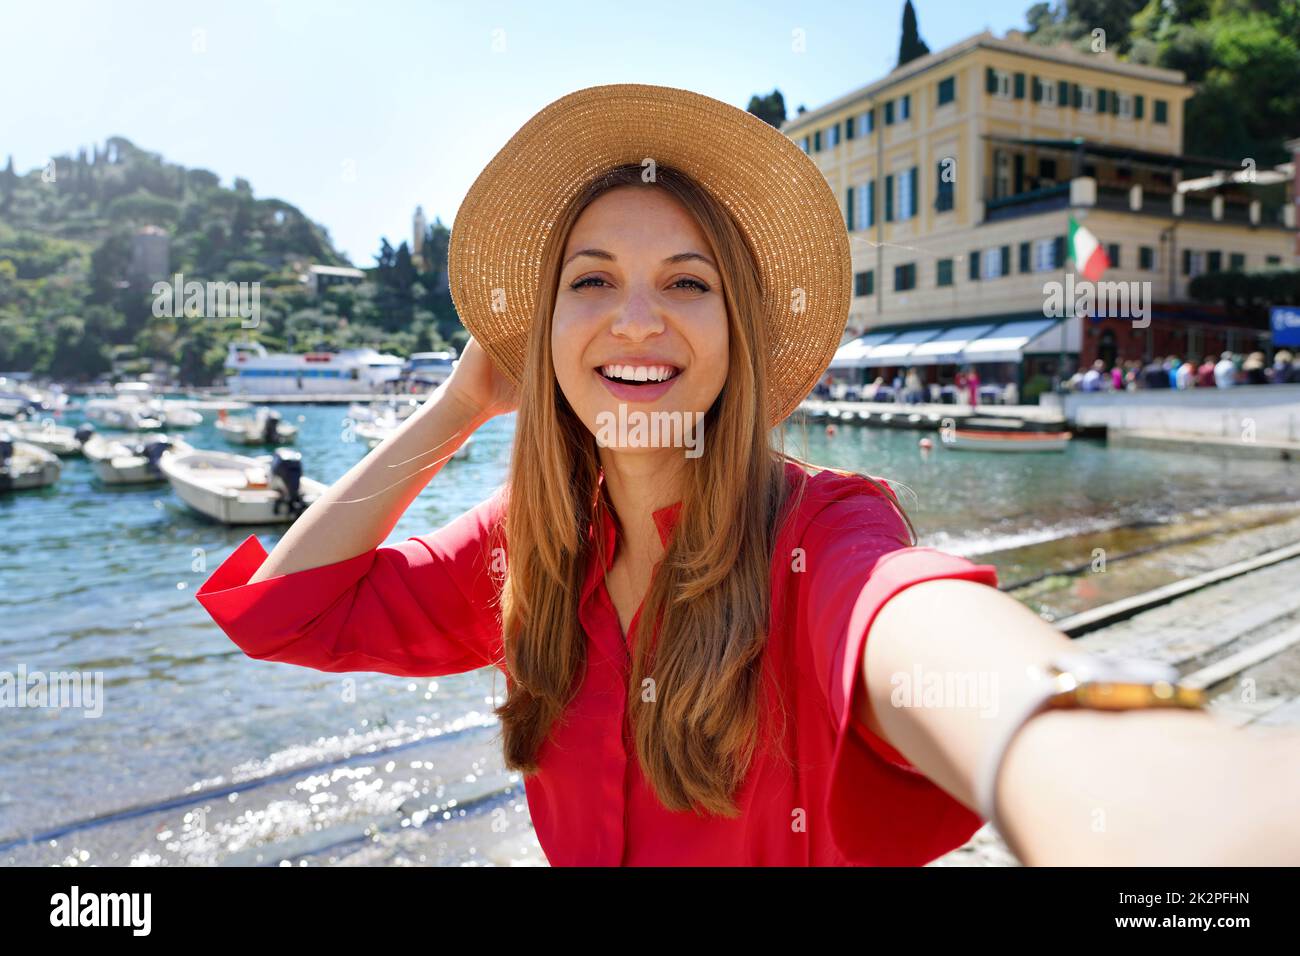 Portofino tourist girl taking selfie photo on famous luxury destination. European tourism attraction in Italy. Young woman on vacation. Stock Photo